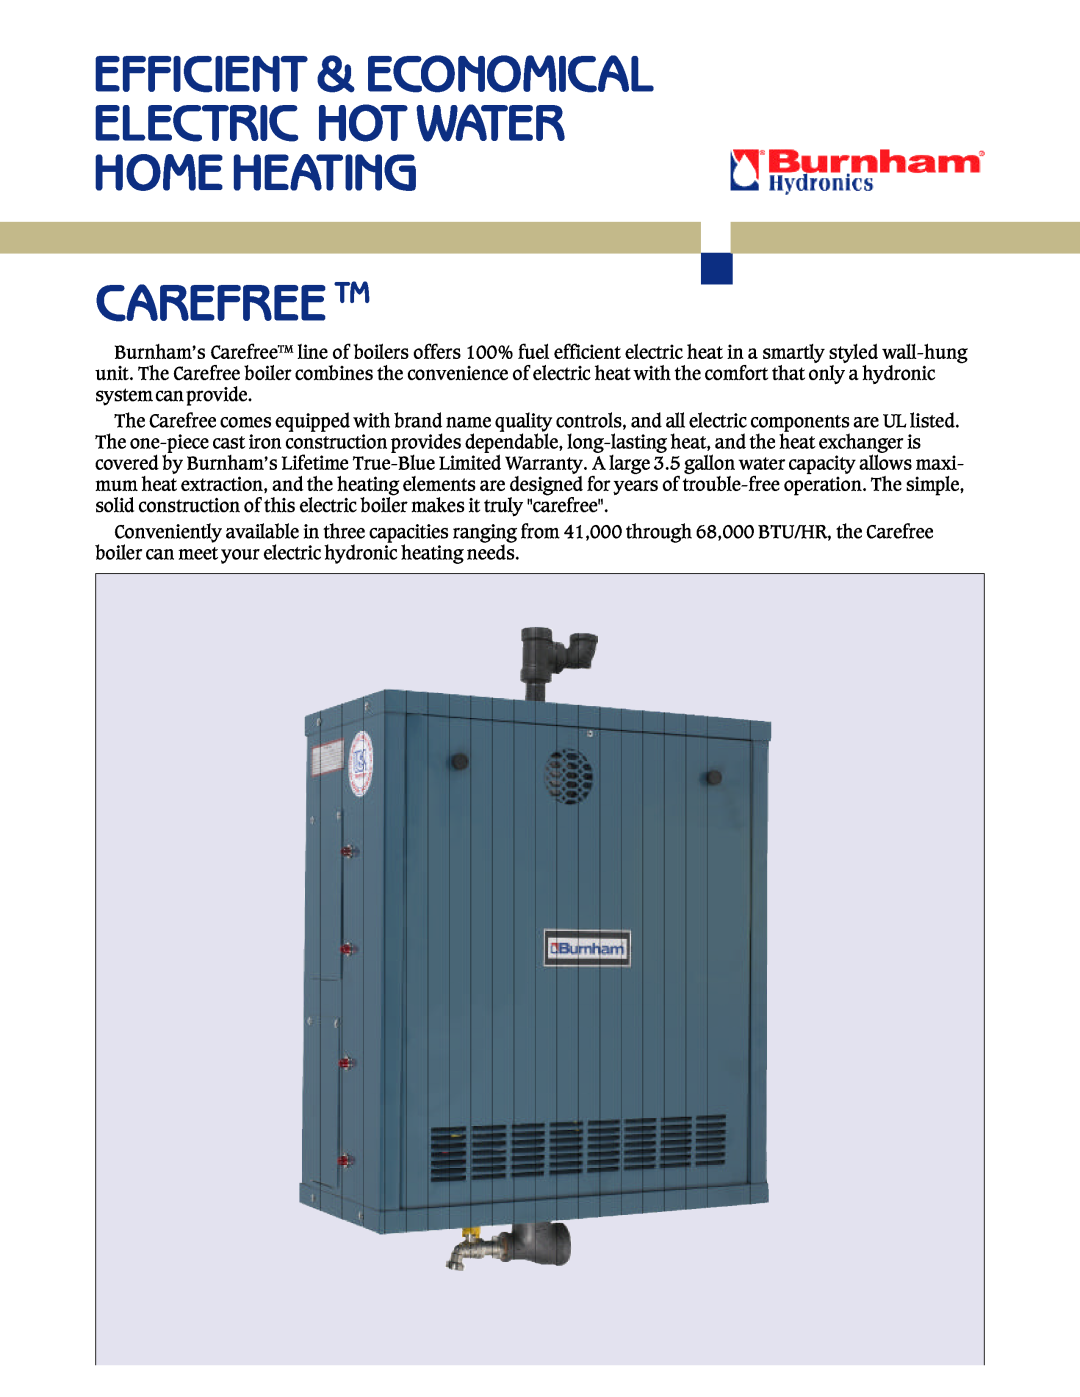 Burnham DOE warranty Efficient & Economical Electric Hot Water Home Heating Carefree Tm 